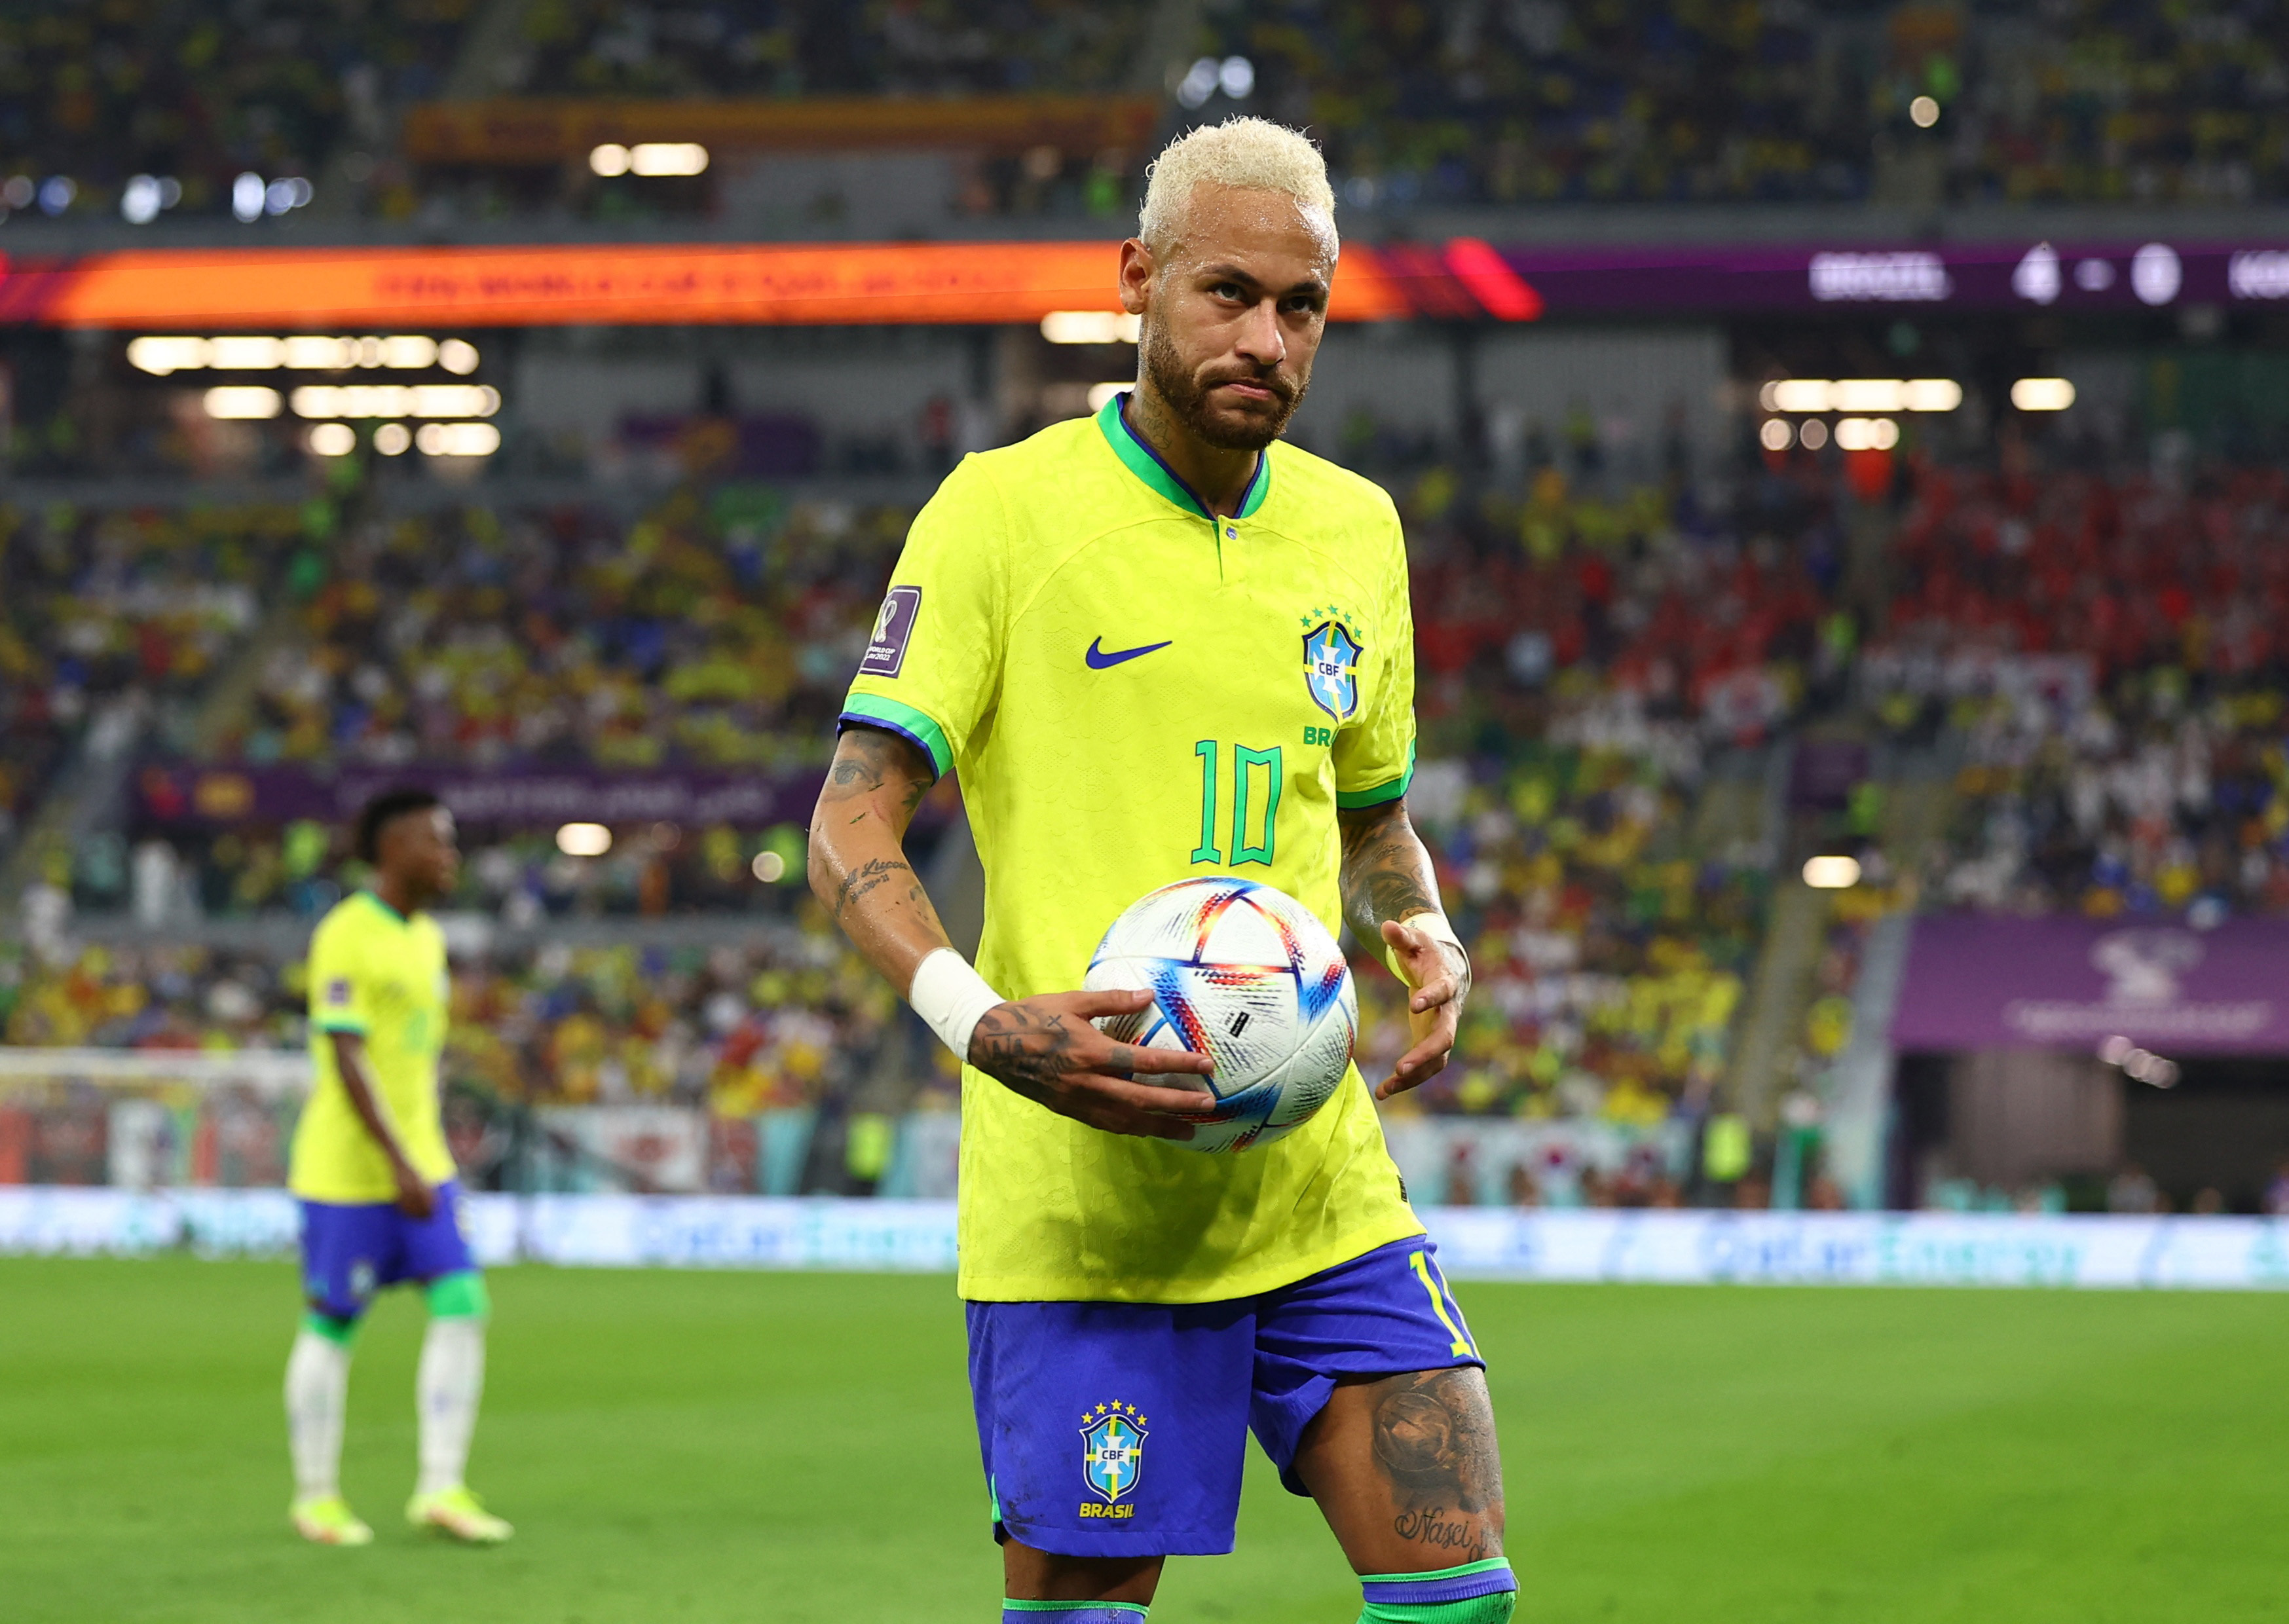 Neymar a punto de sacar un tiro de esquina. Foto: REUTERS/Kai Pfaffenbach